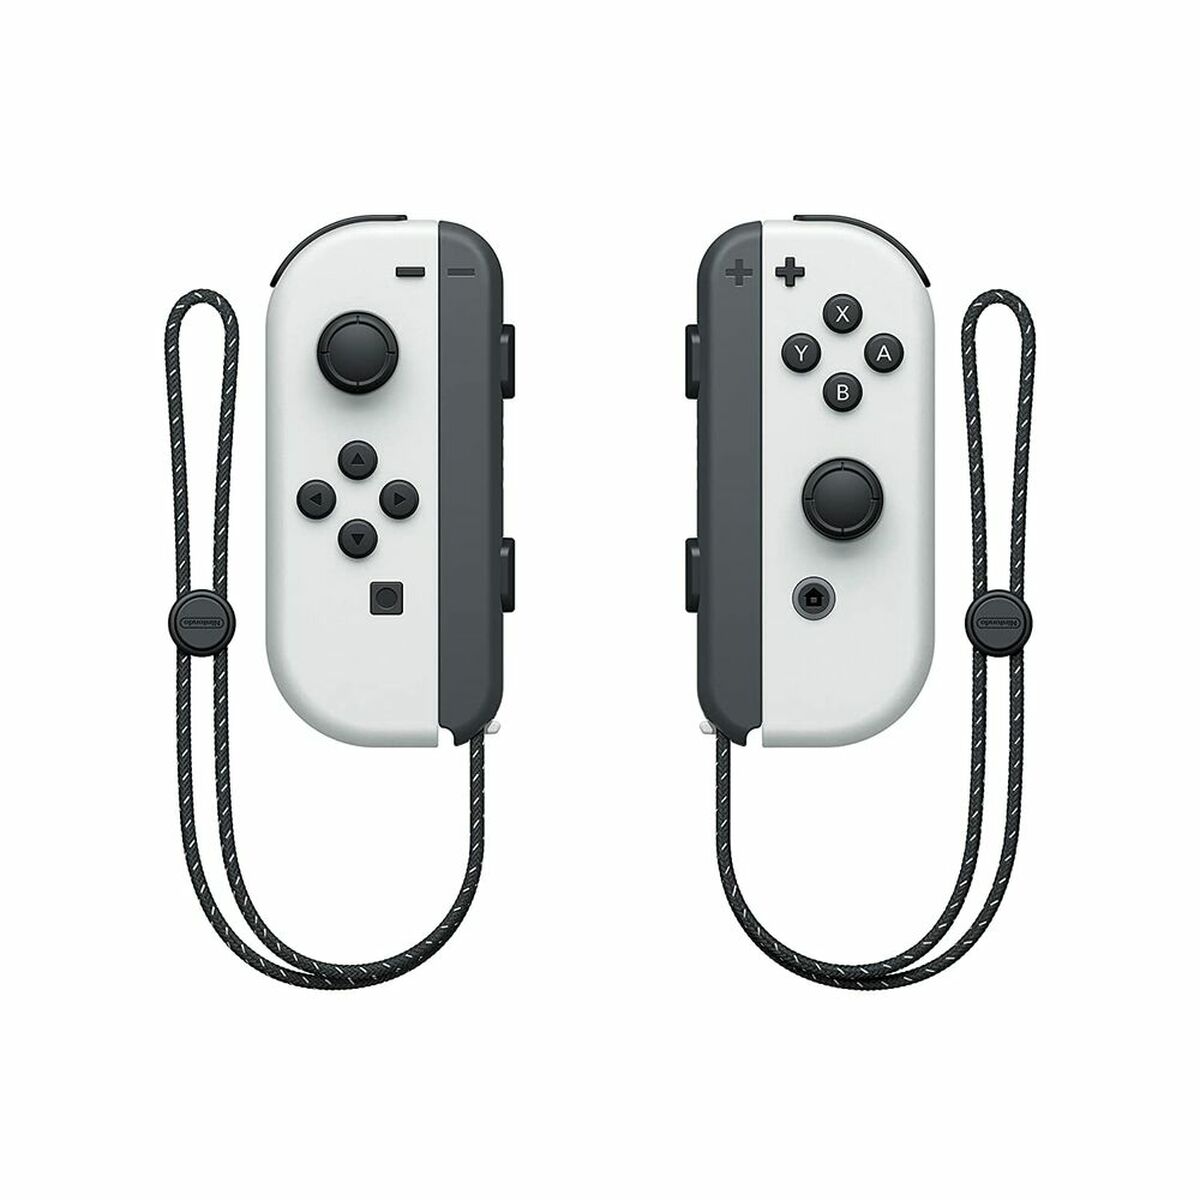 Spēļu konsole Nintendo Switch Nintendo Switch OLED Balts